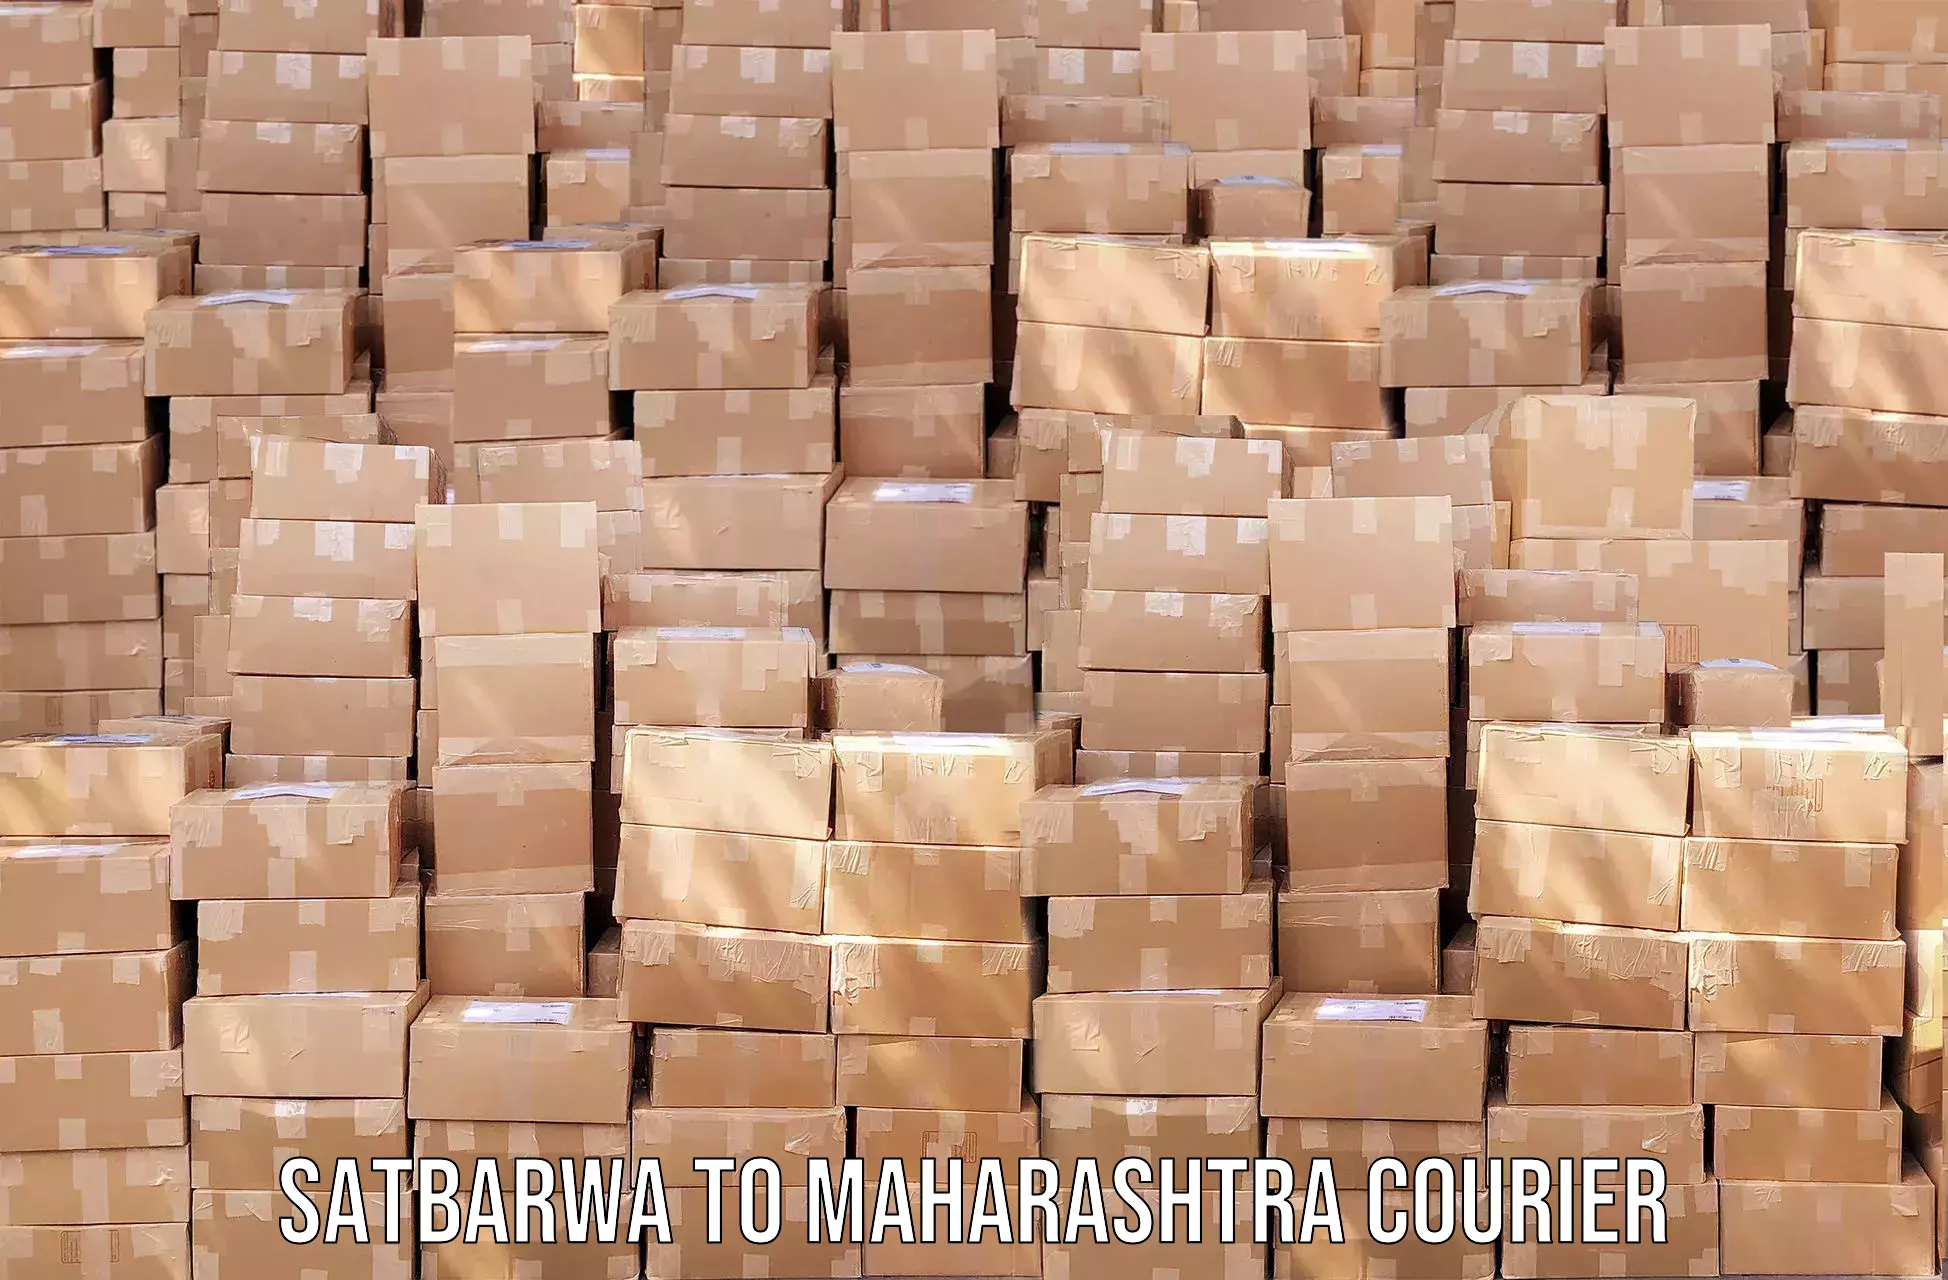 Courier service partnerships Satbarwa to Satara